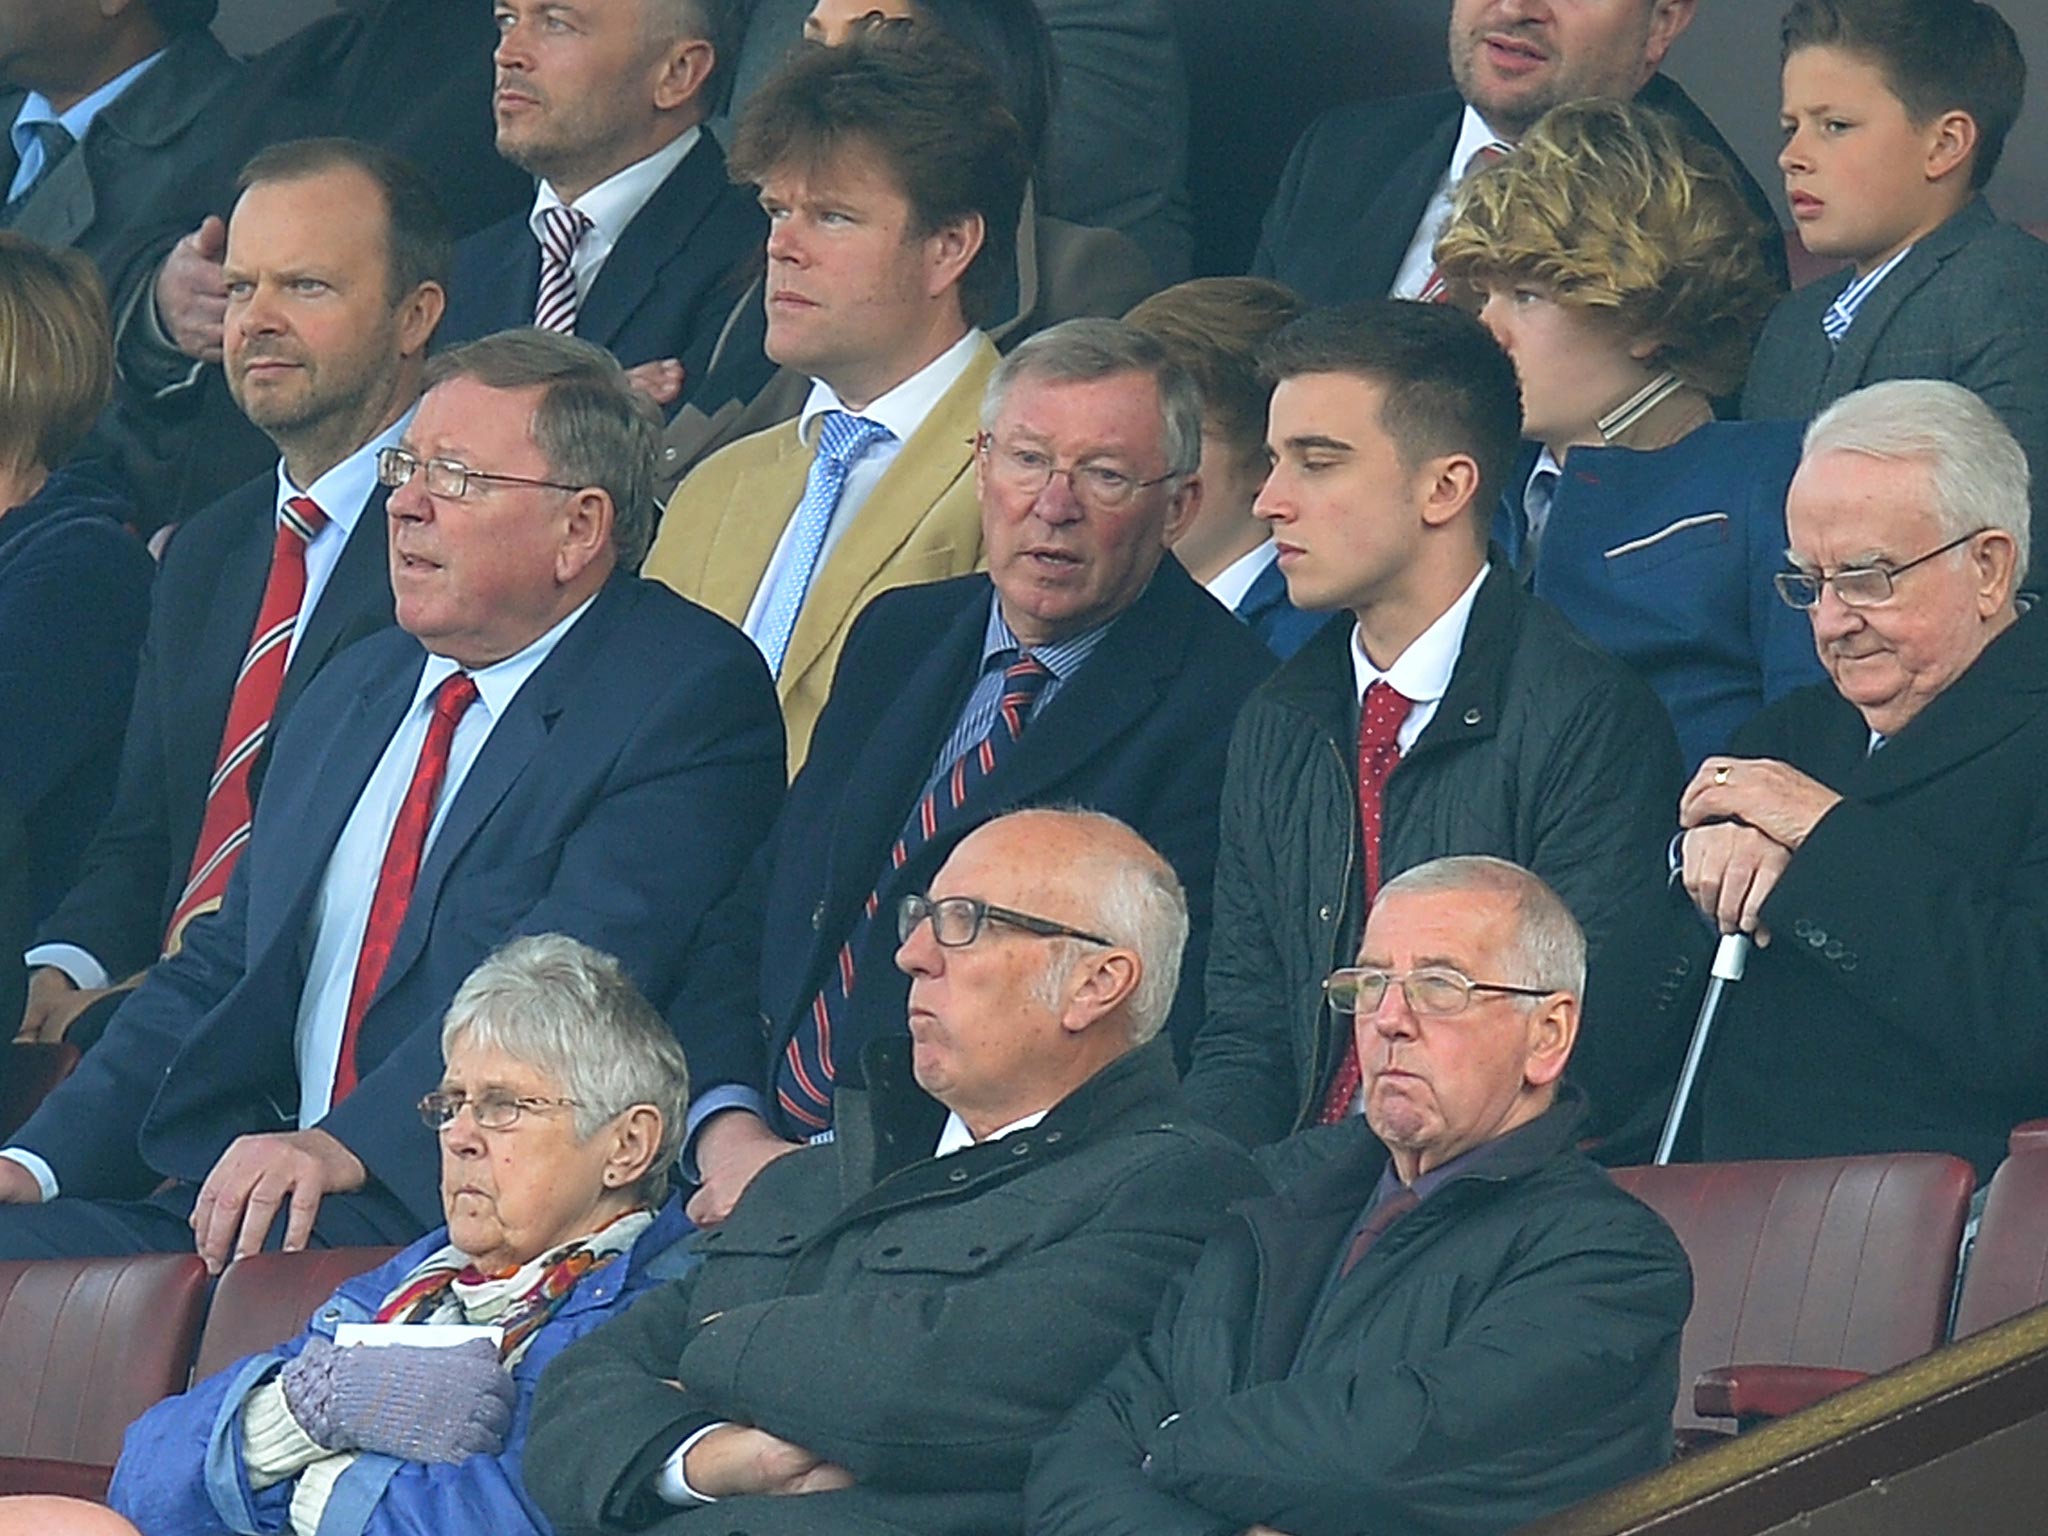 Sir Alex Ferguson has been a regular at Manchester United matches since his retirement